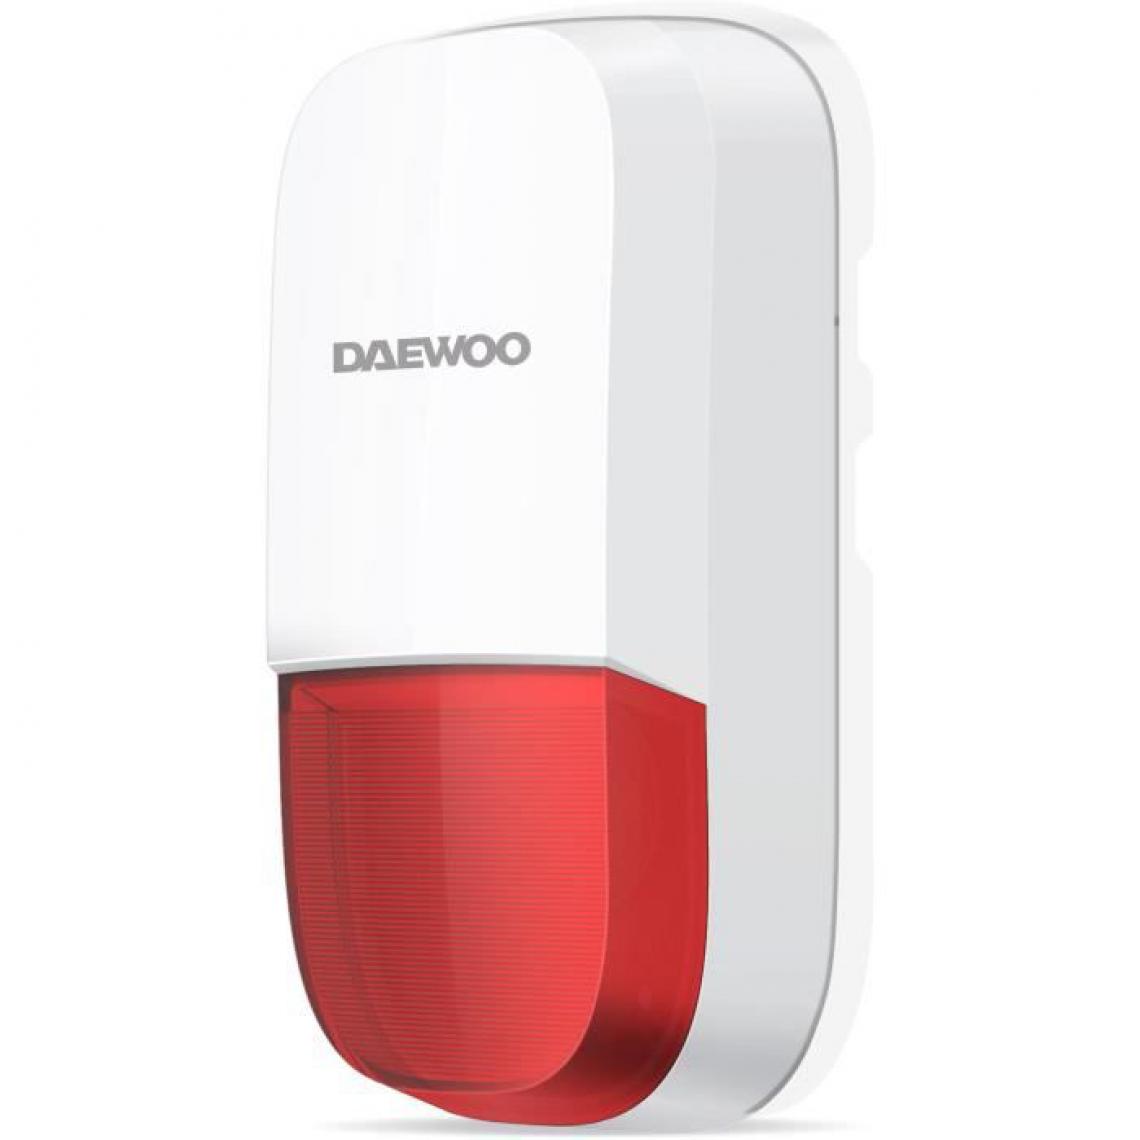 Daewoo - DAEWOO Sirene extérieure WOS501 pour systeme d'alarme SA501 - Alarme connectée